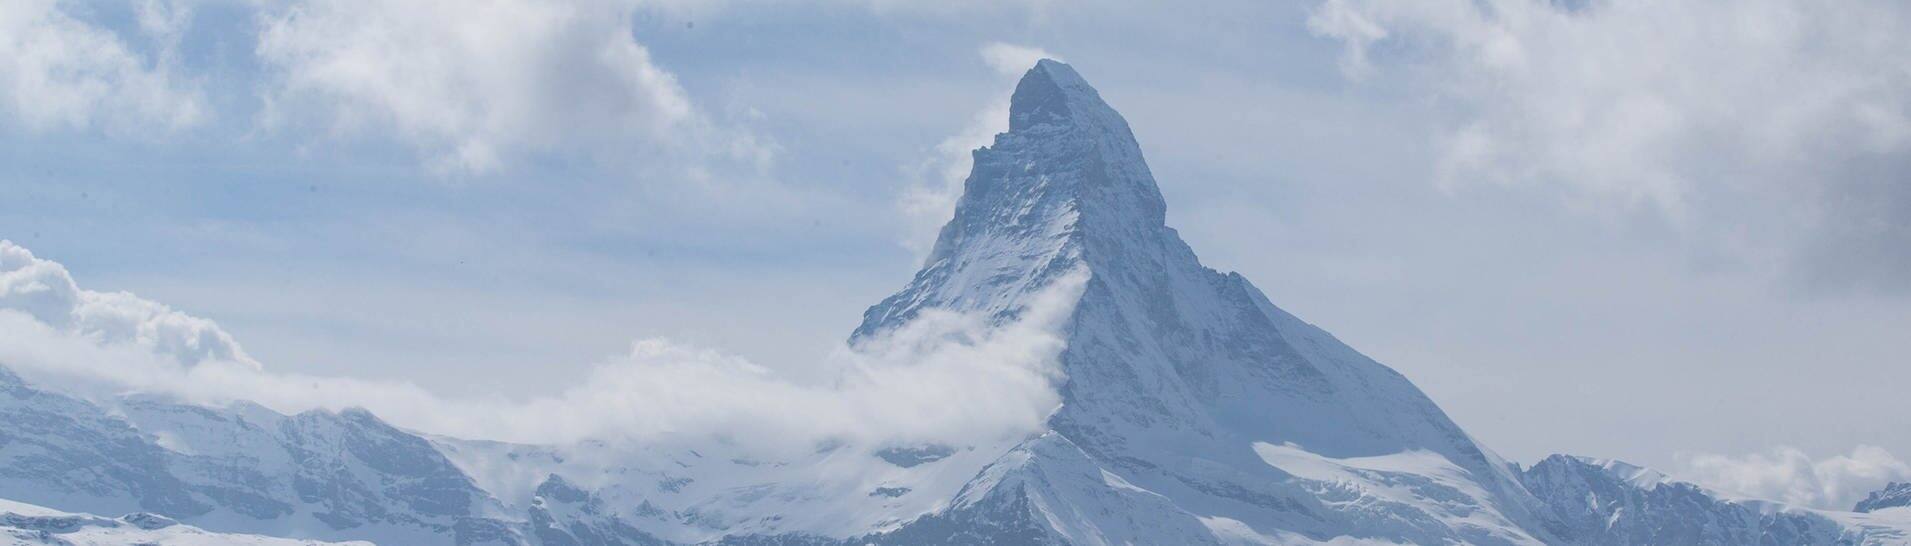 Das Matterhorn im Schweitzer Kanton Wallis. (Foto: dpa Bildfunk, picture alliance/dpa/Xinhua | Xu Jinquan)